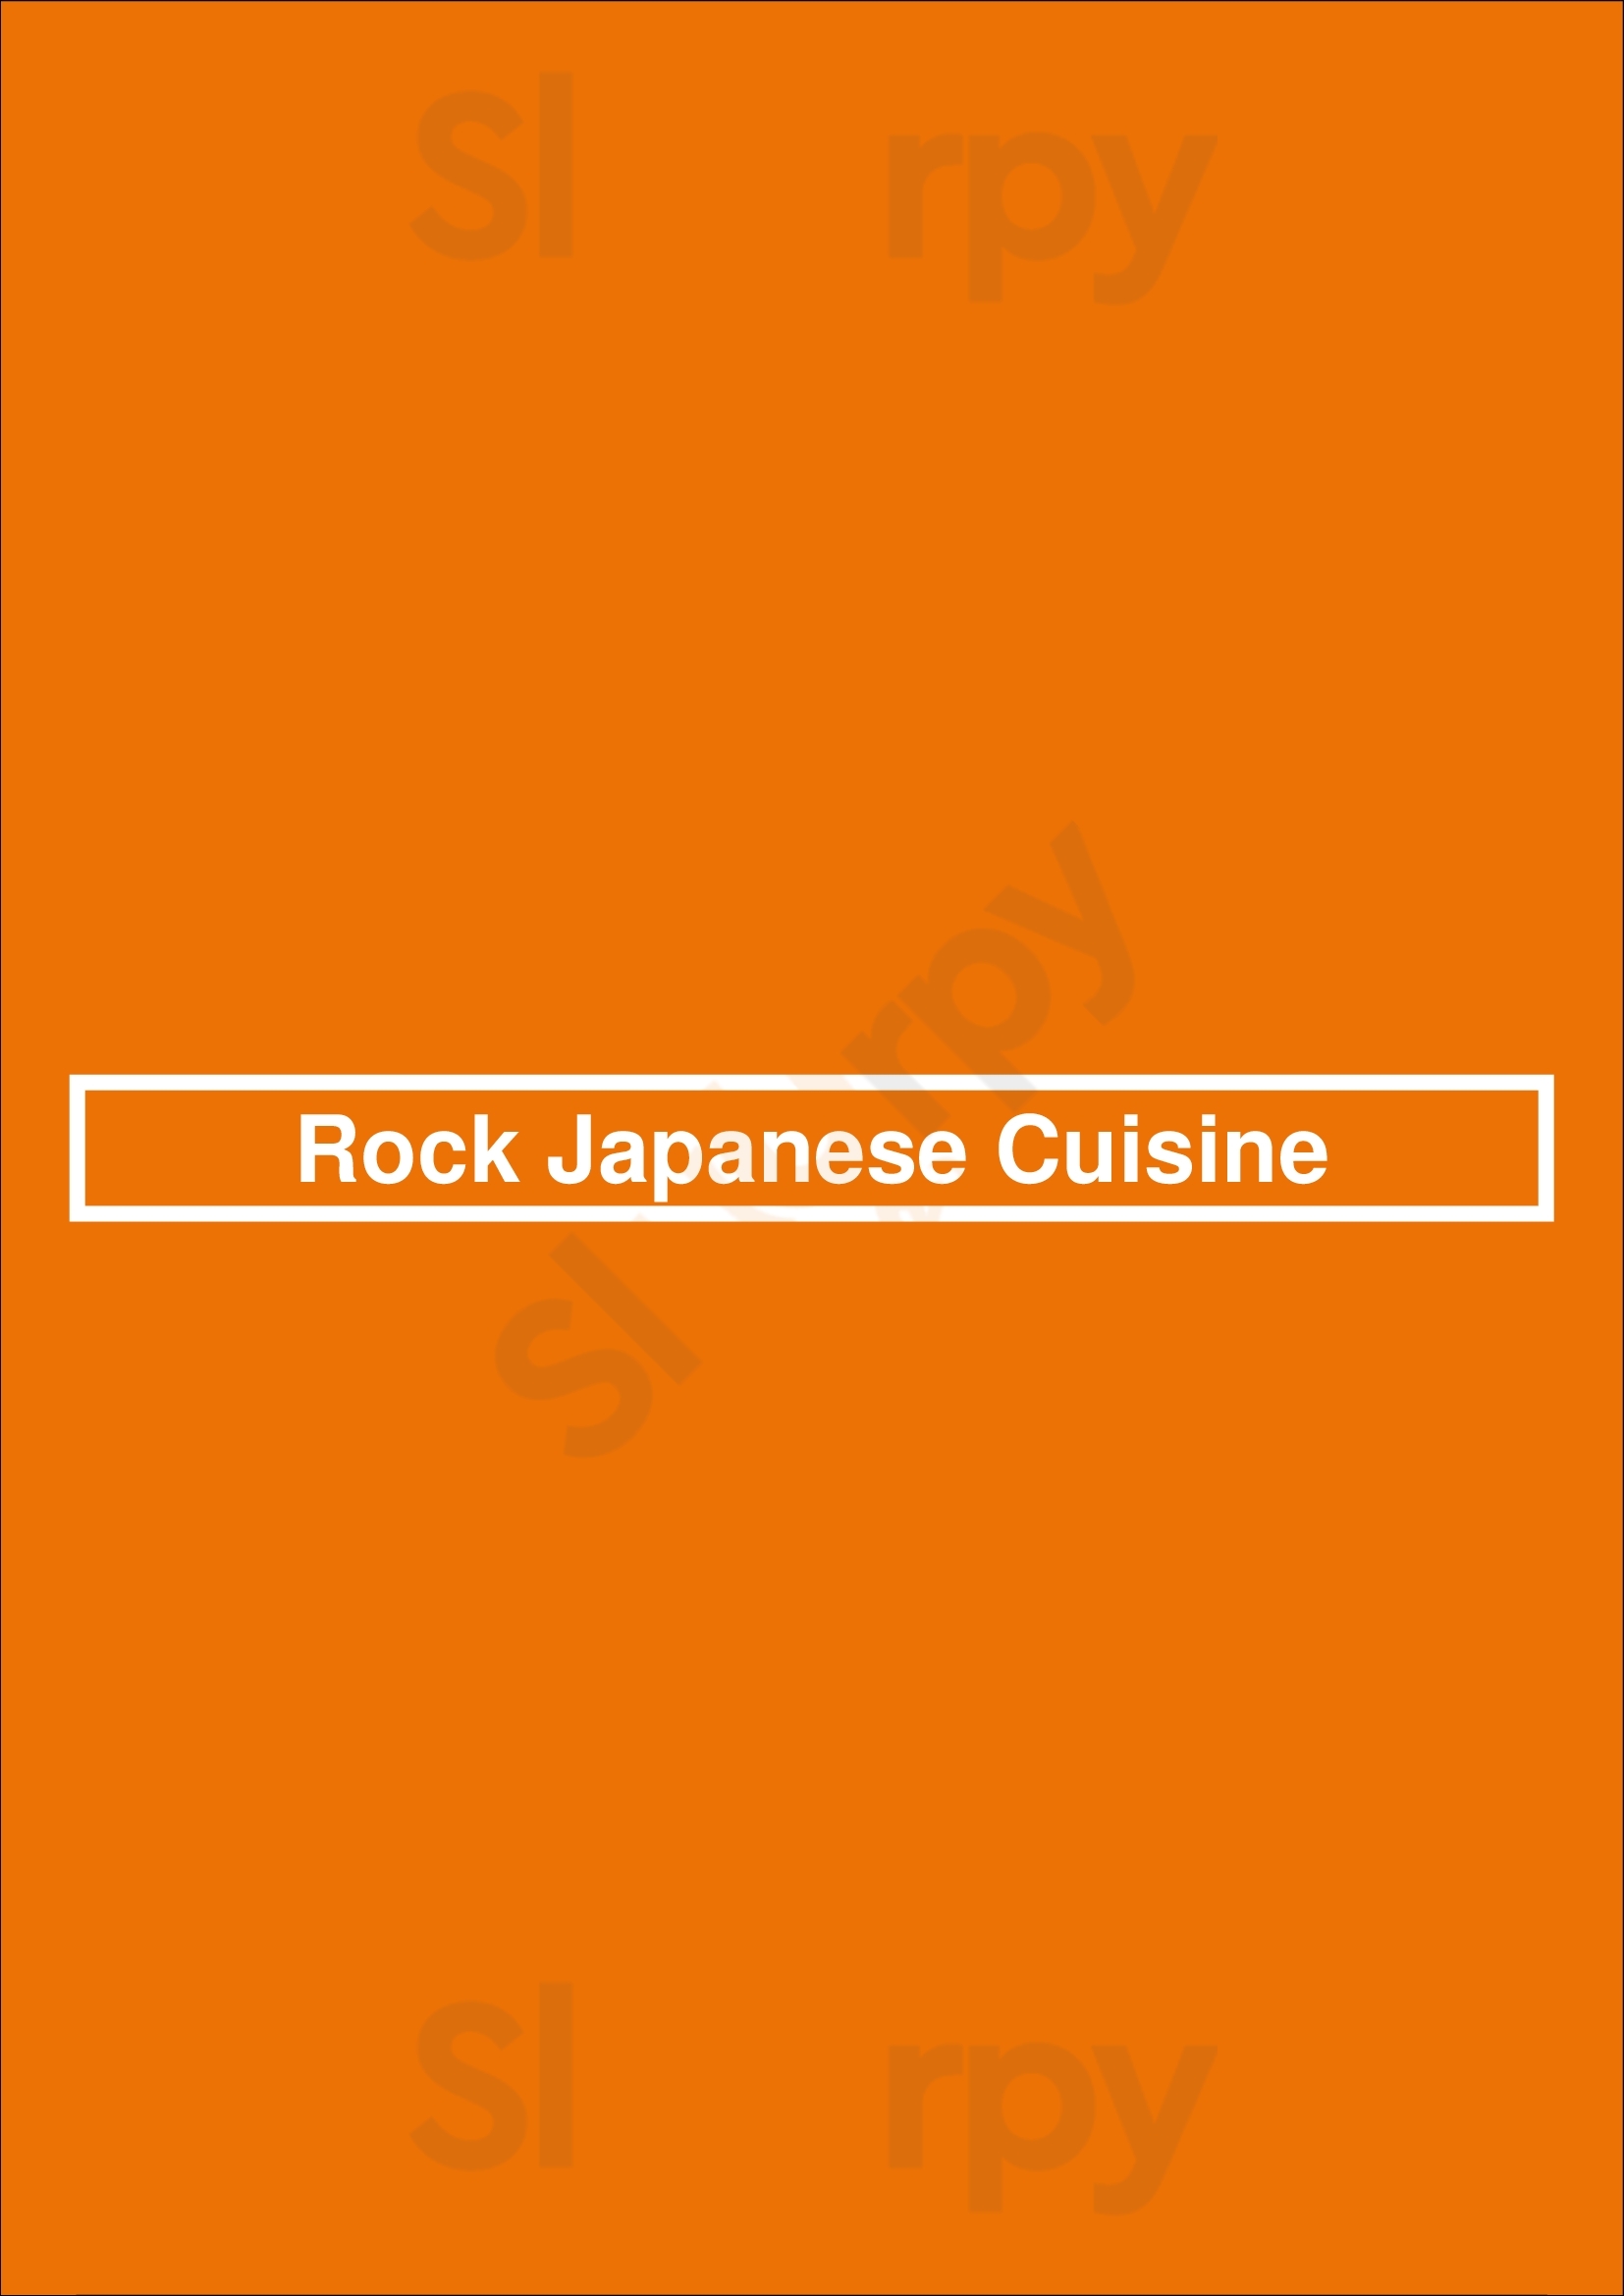 Rock Japanese Cuisine San Francisco Menu - 1